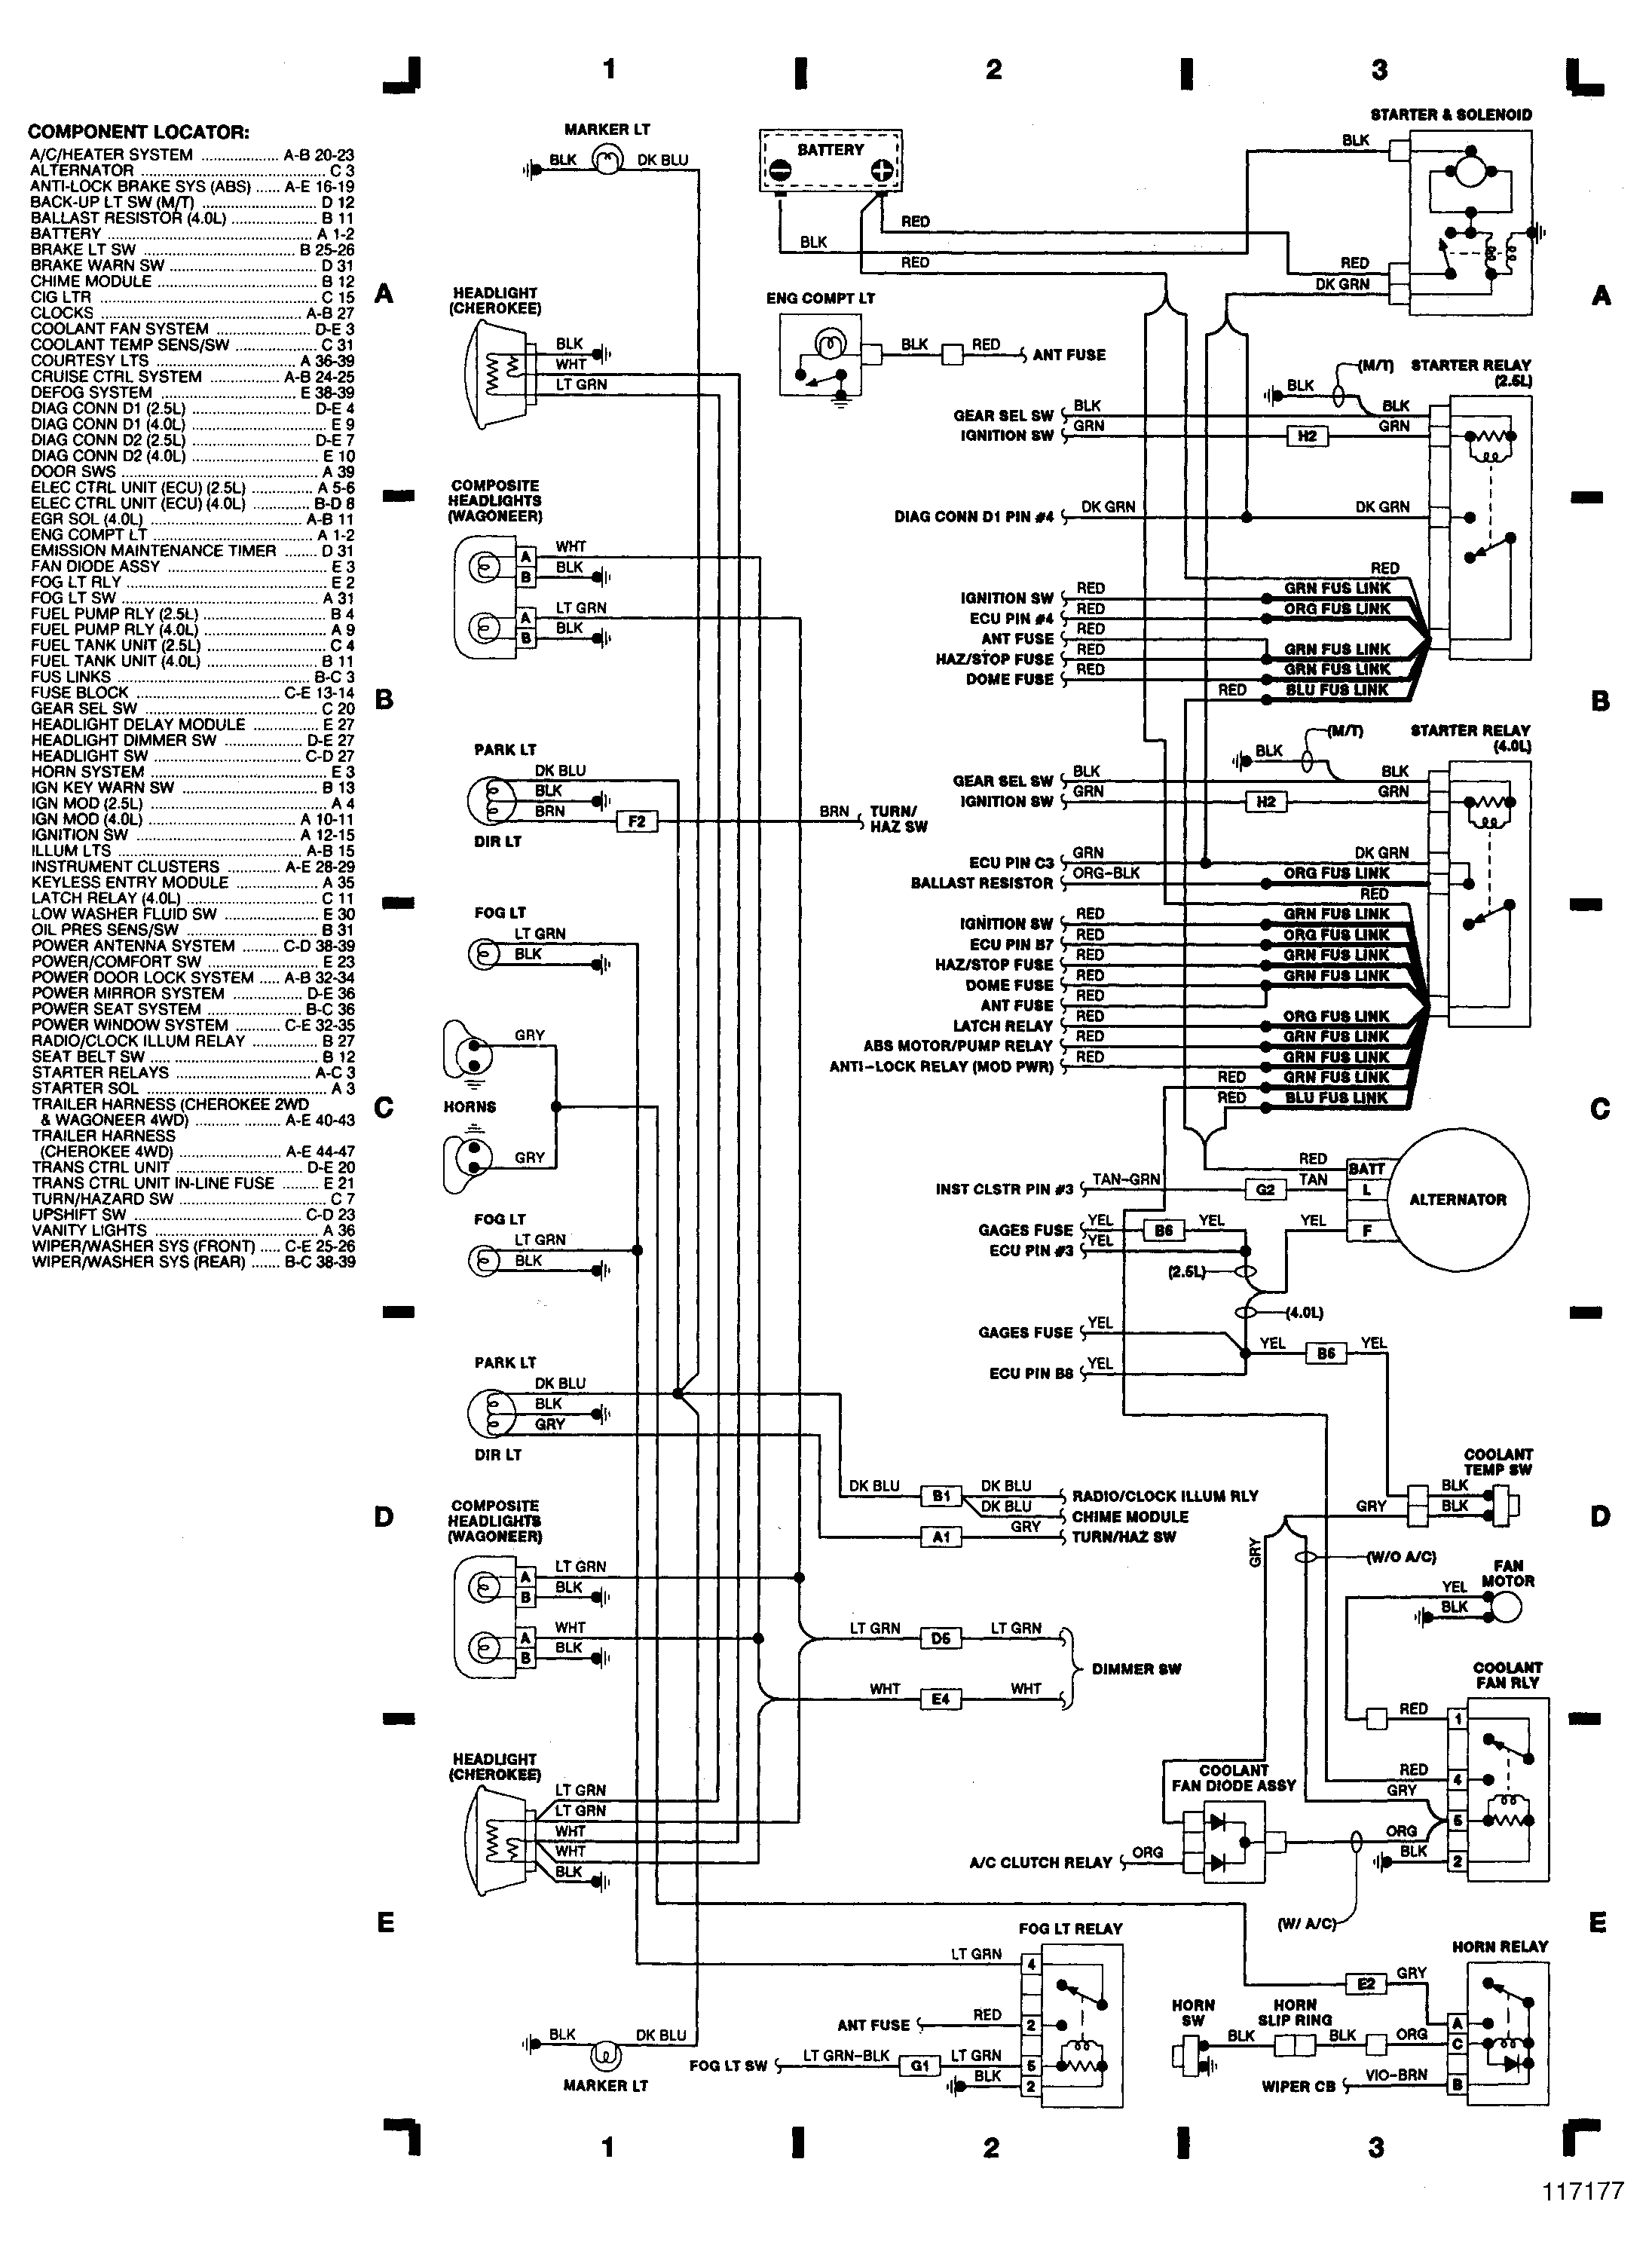 wiring diagram for 1995 jeep grand cherokee laredo and 5acf2dd40efc4 jpg